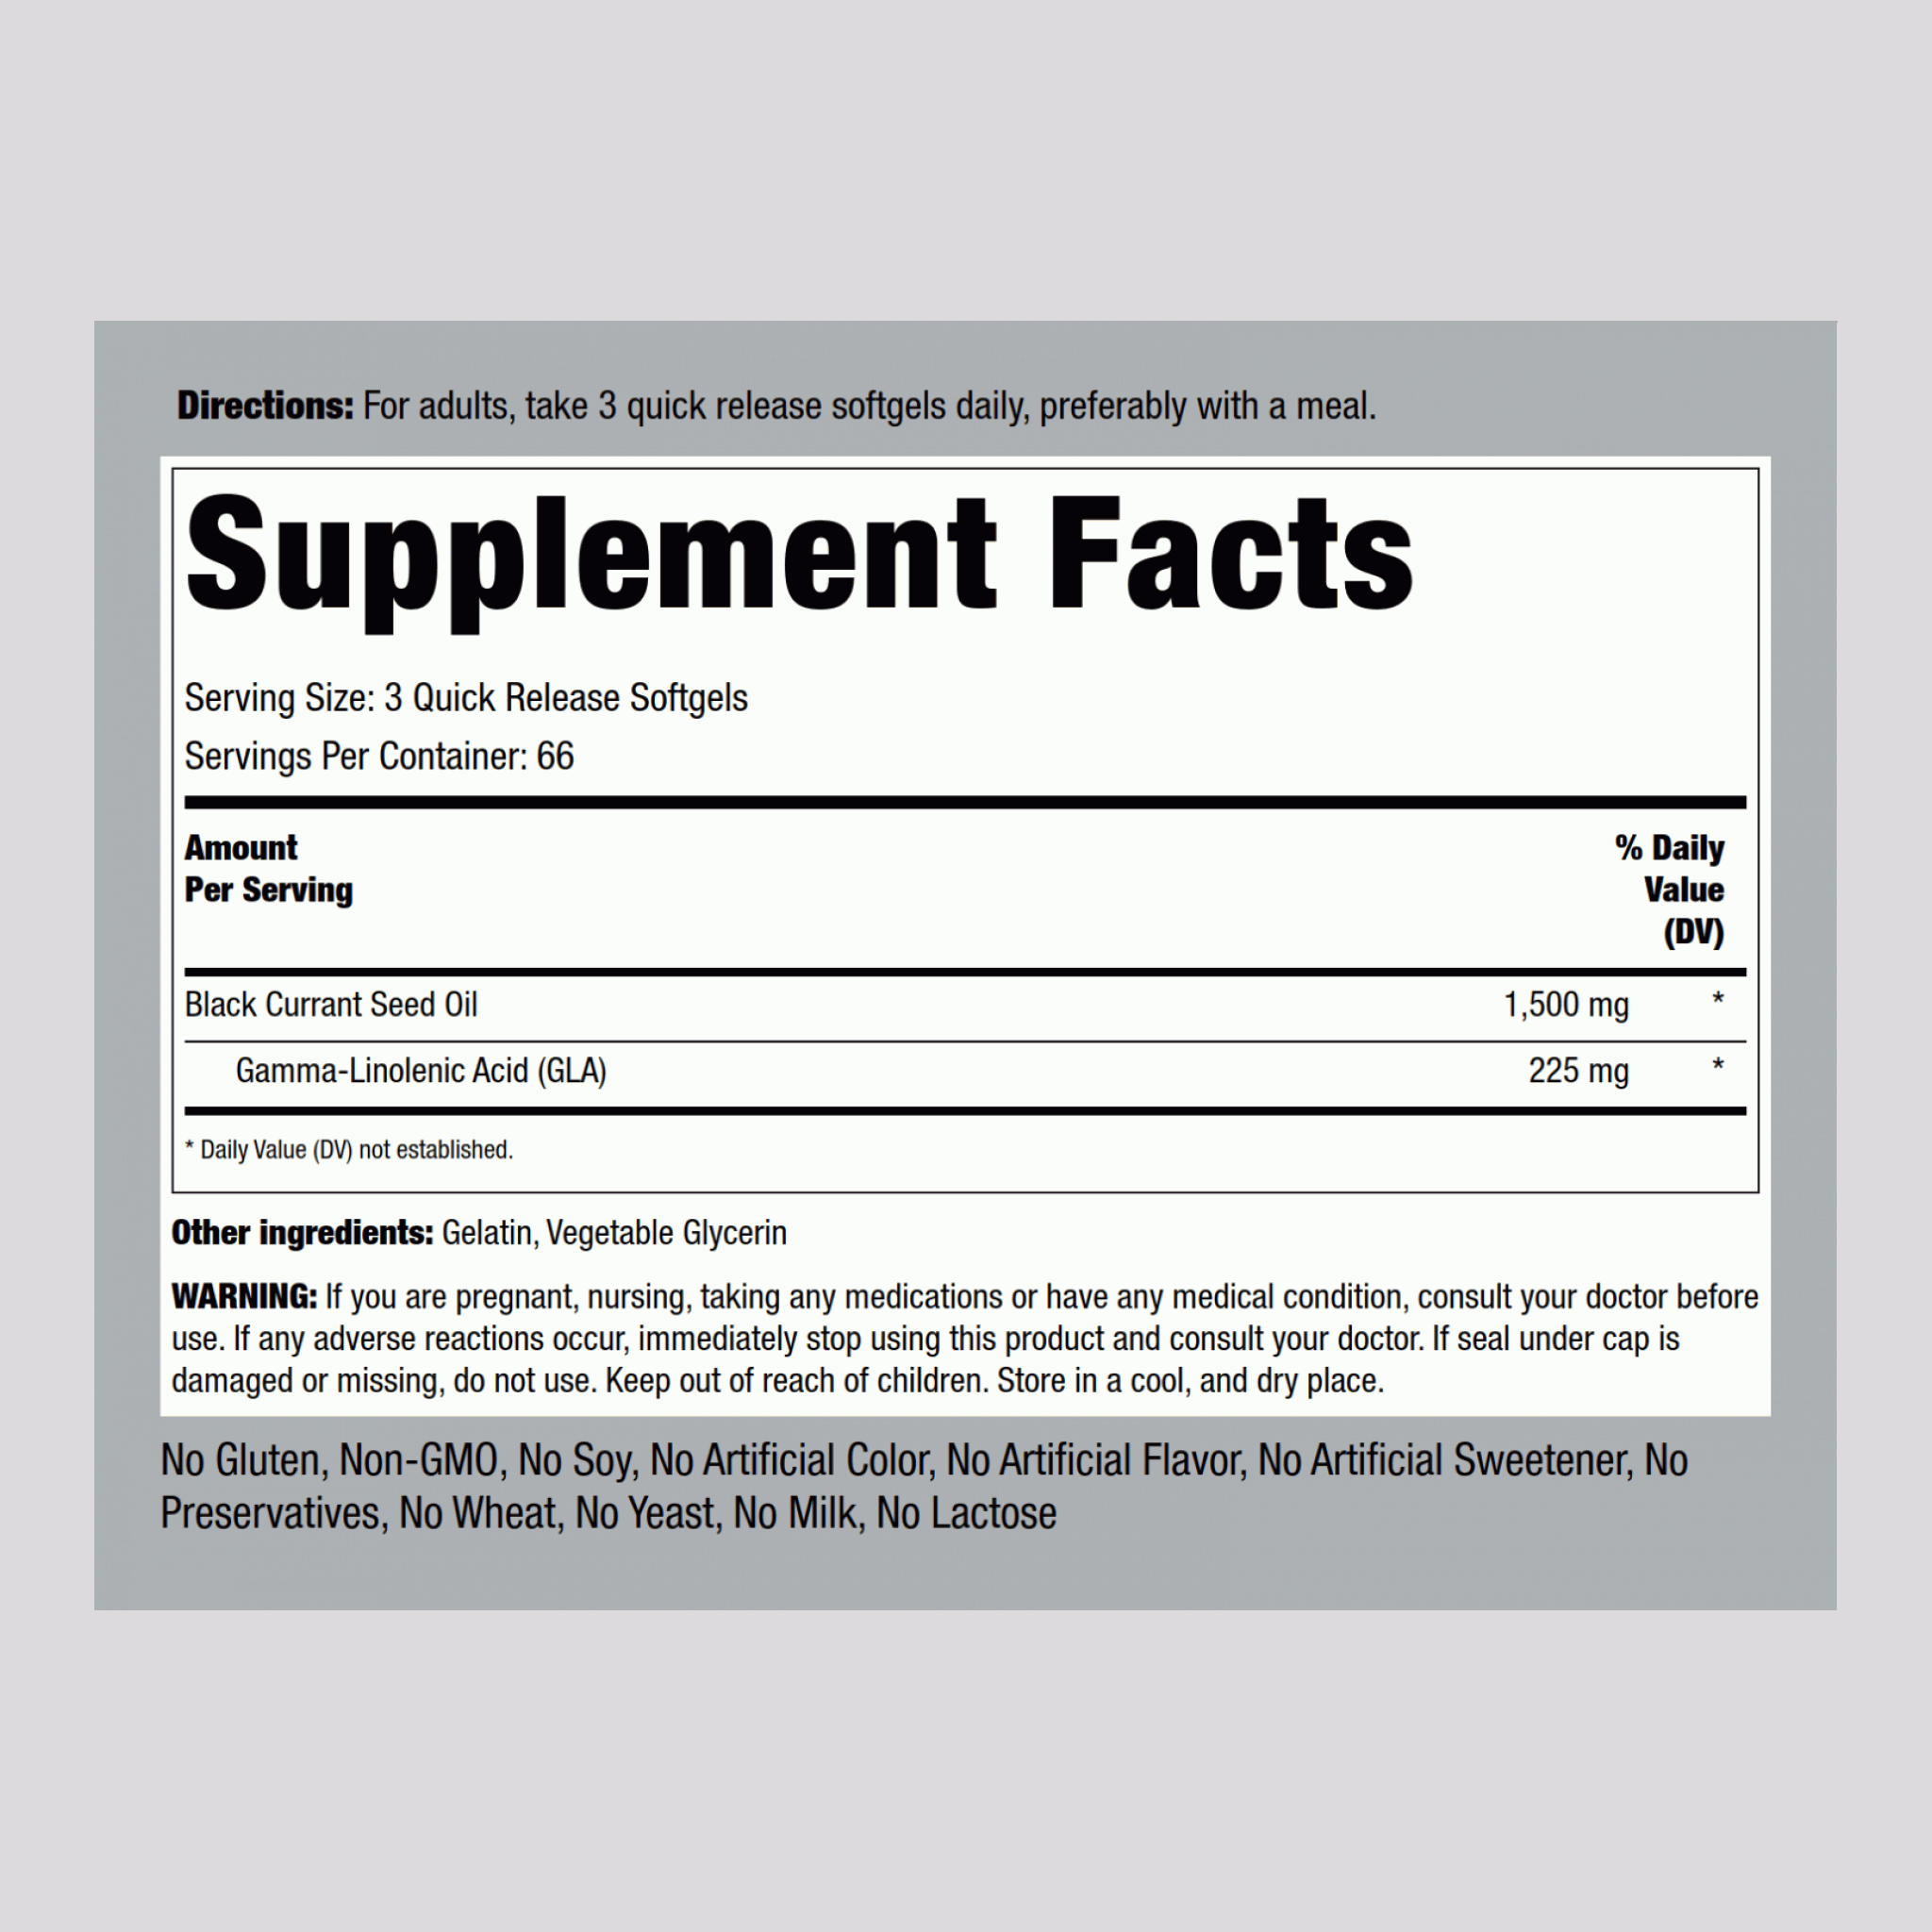 Black Currant Seed Oil, 1500 mg (per serving), 200 Quick Release Softgels, 2  Bottles